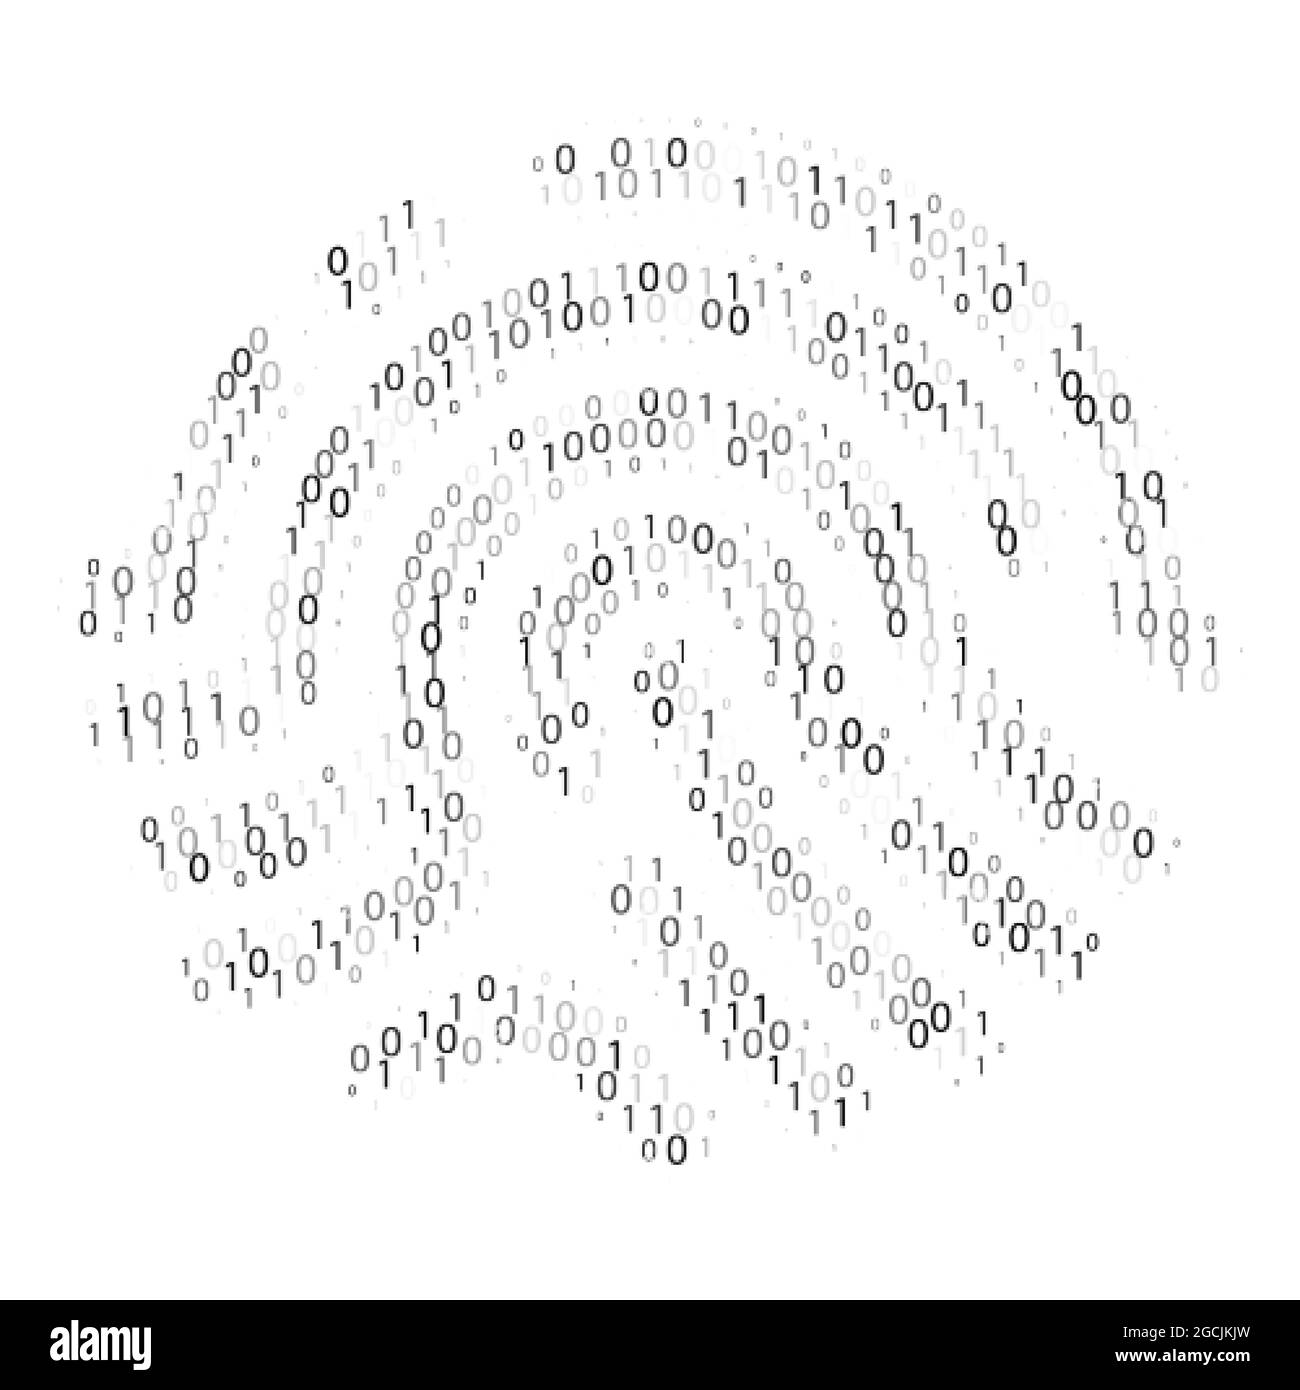 Binärcode des Fingerabdrucks. Digitale Identifikation. Datenzugriff oder -Überprüfung. Vektorgrafik Stock Vektor